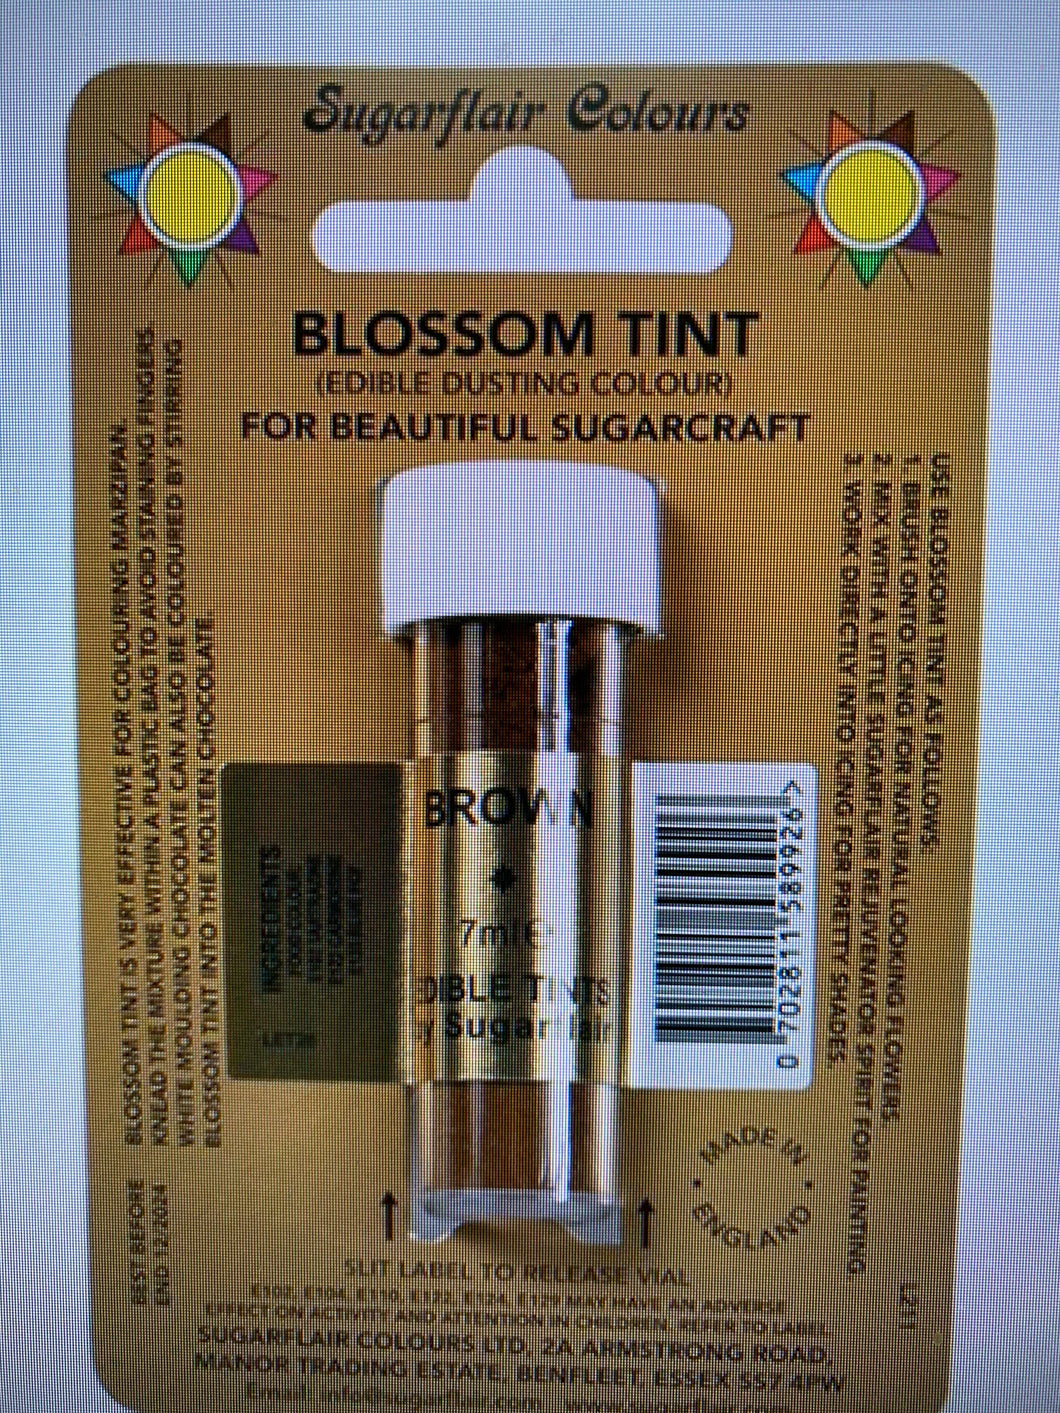 Dusts - Sugarflair - Blossom Tint - Brown